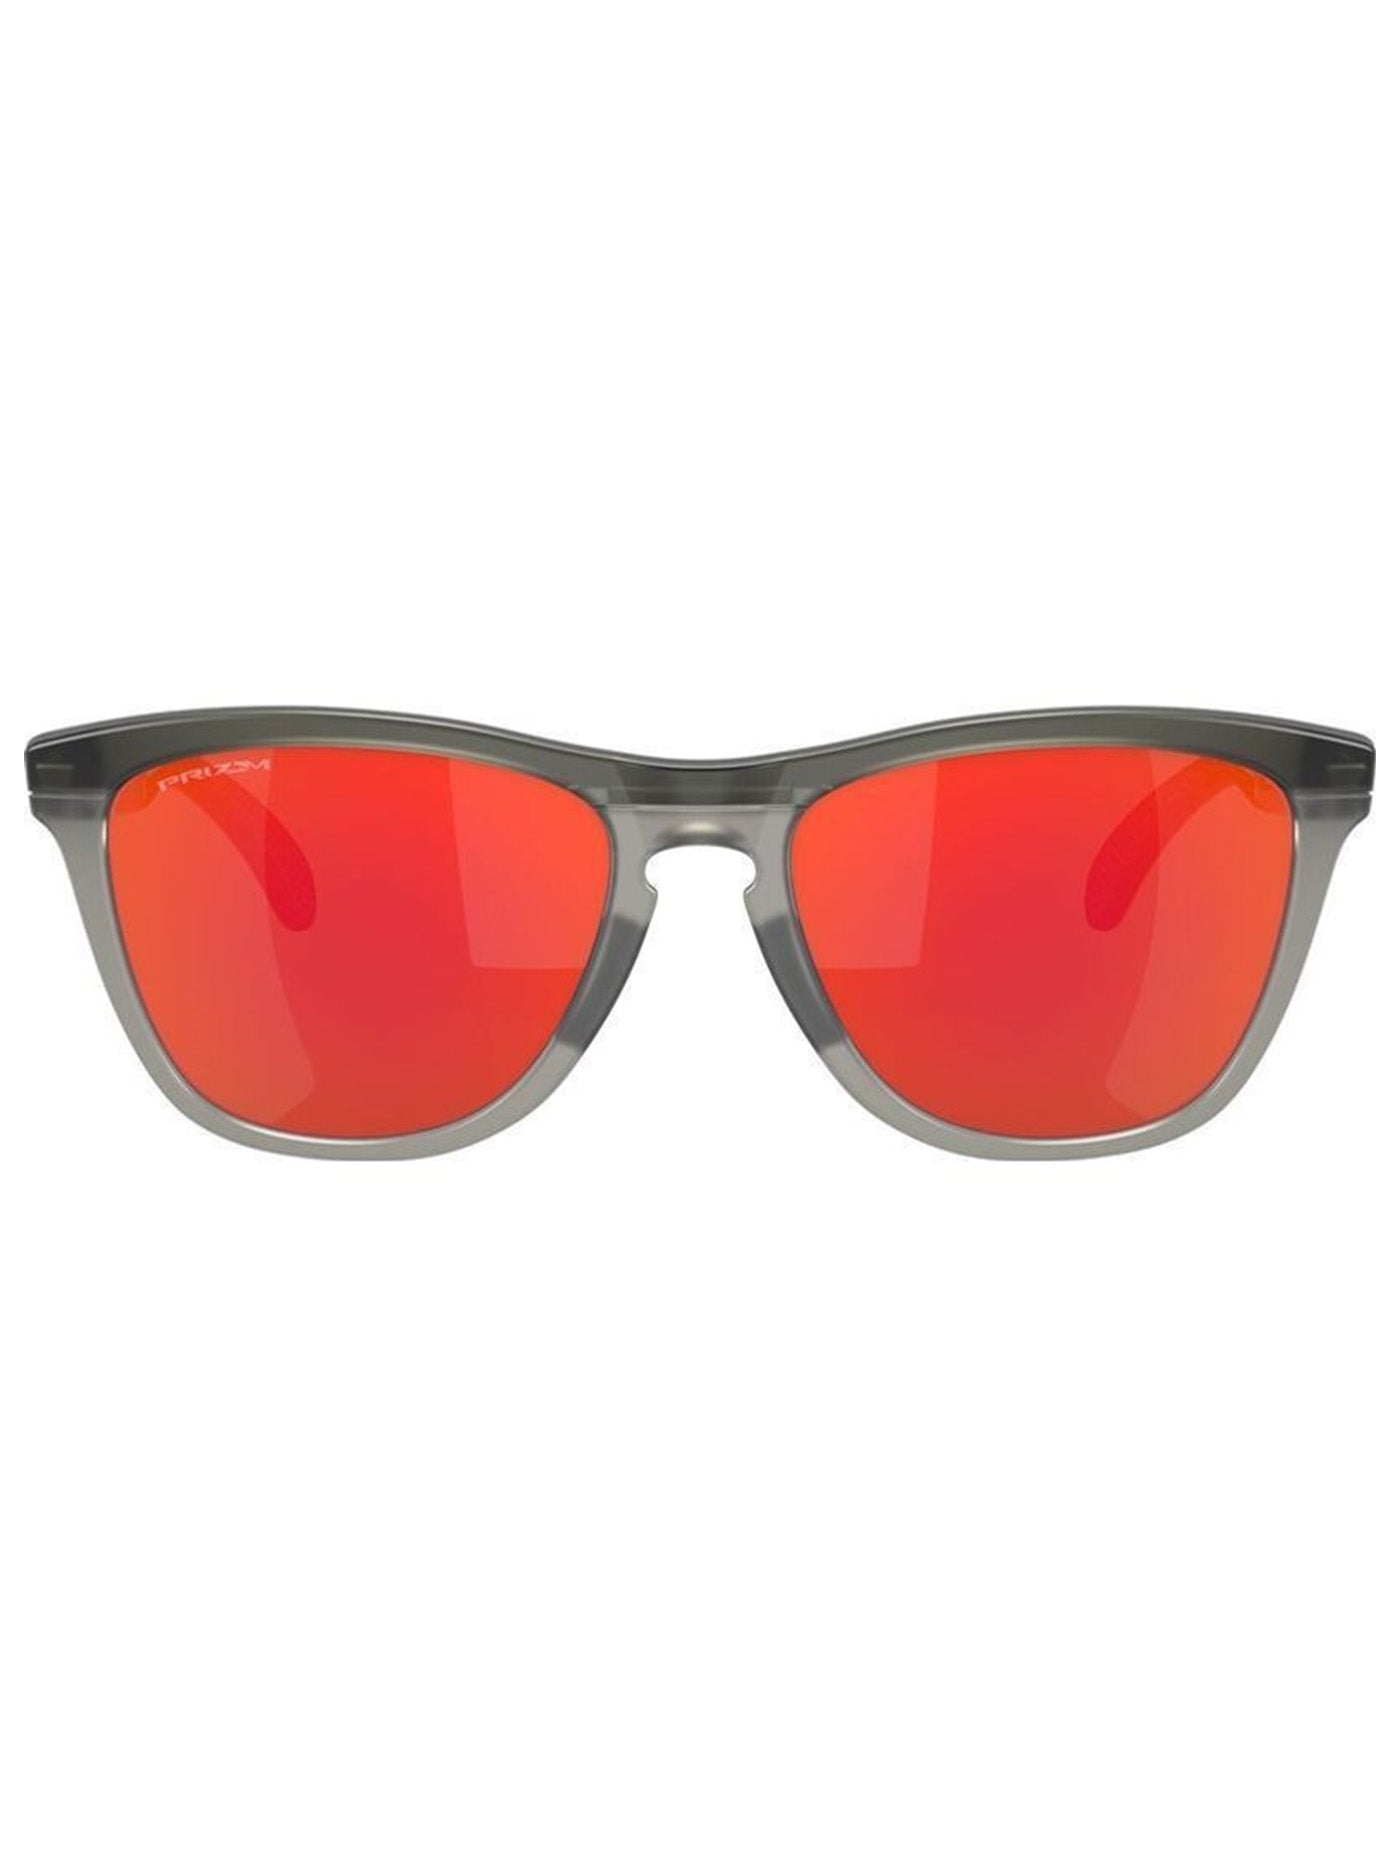 Oakley Frogskins Range Prizm Ruby - Sunglasses